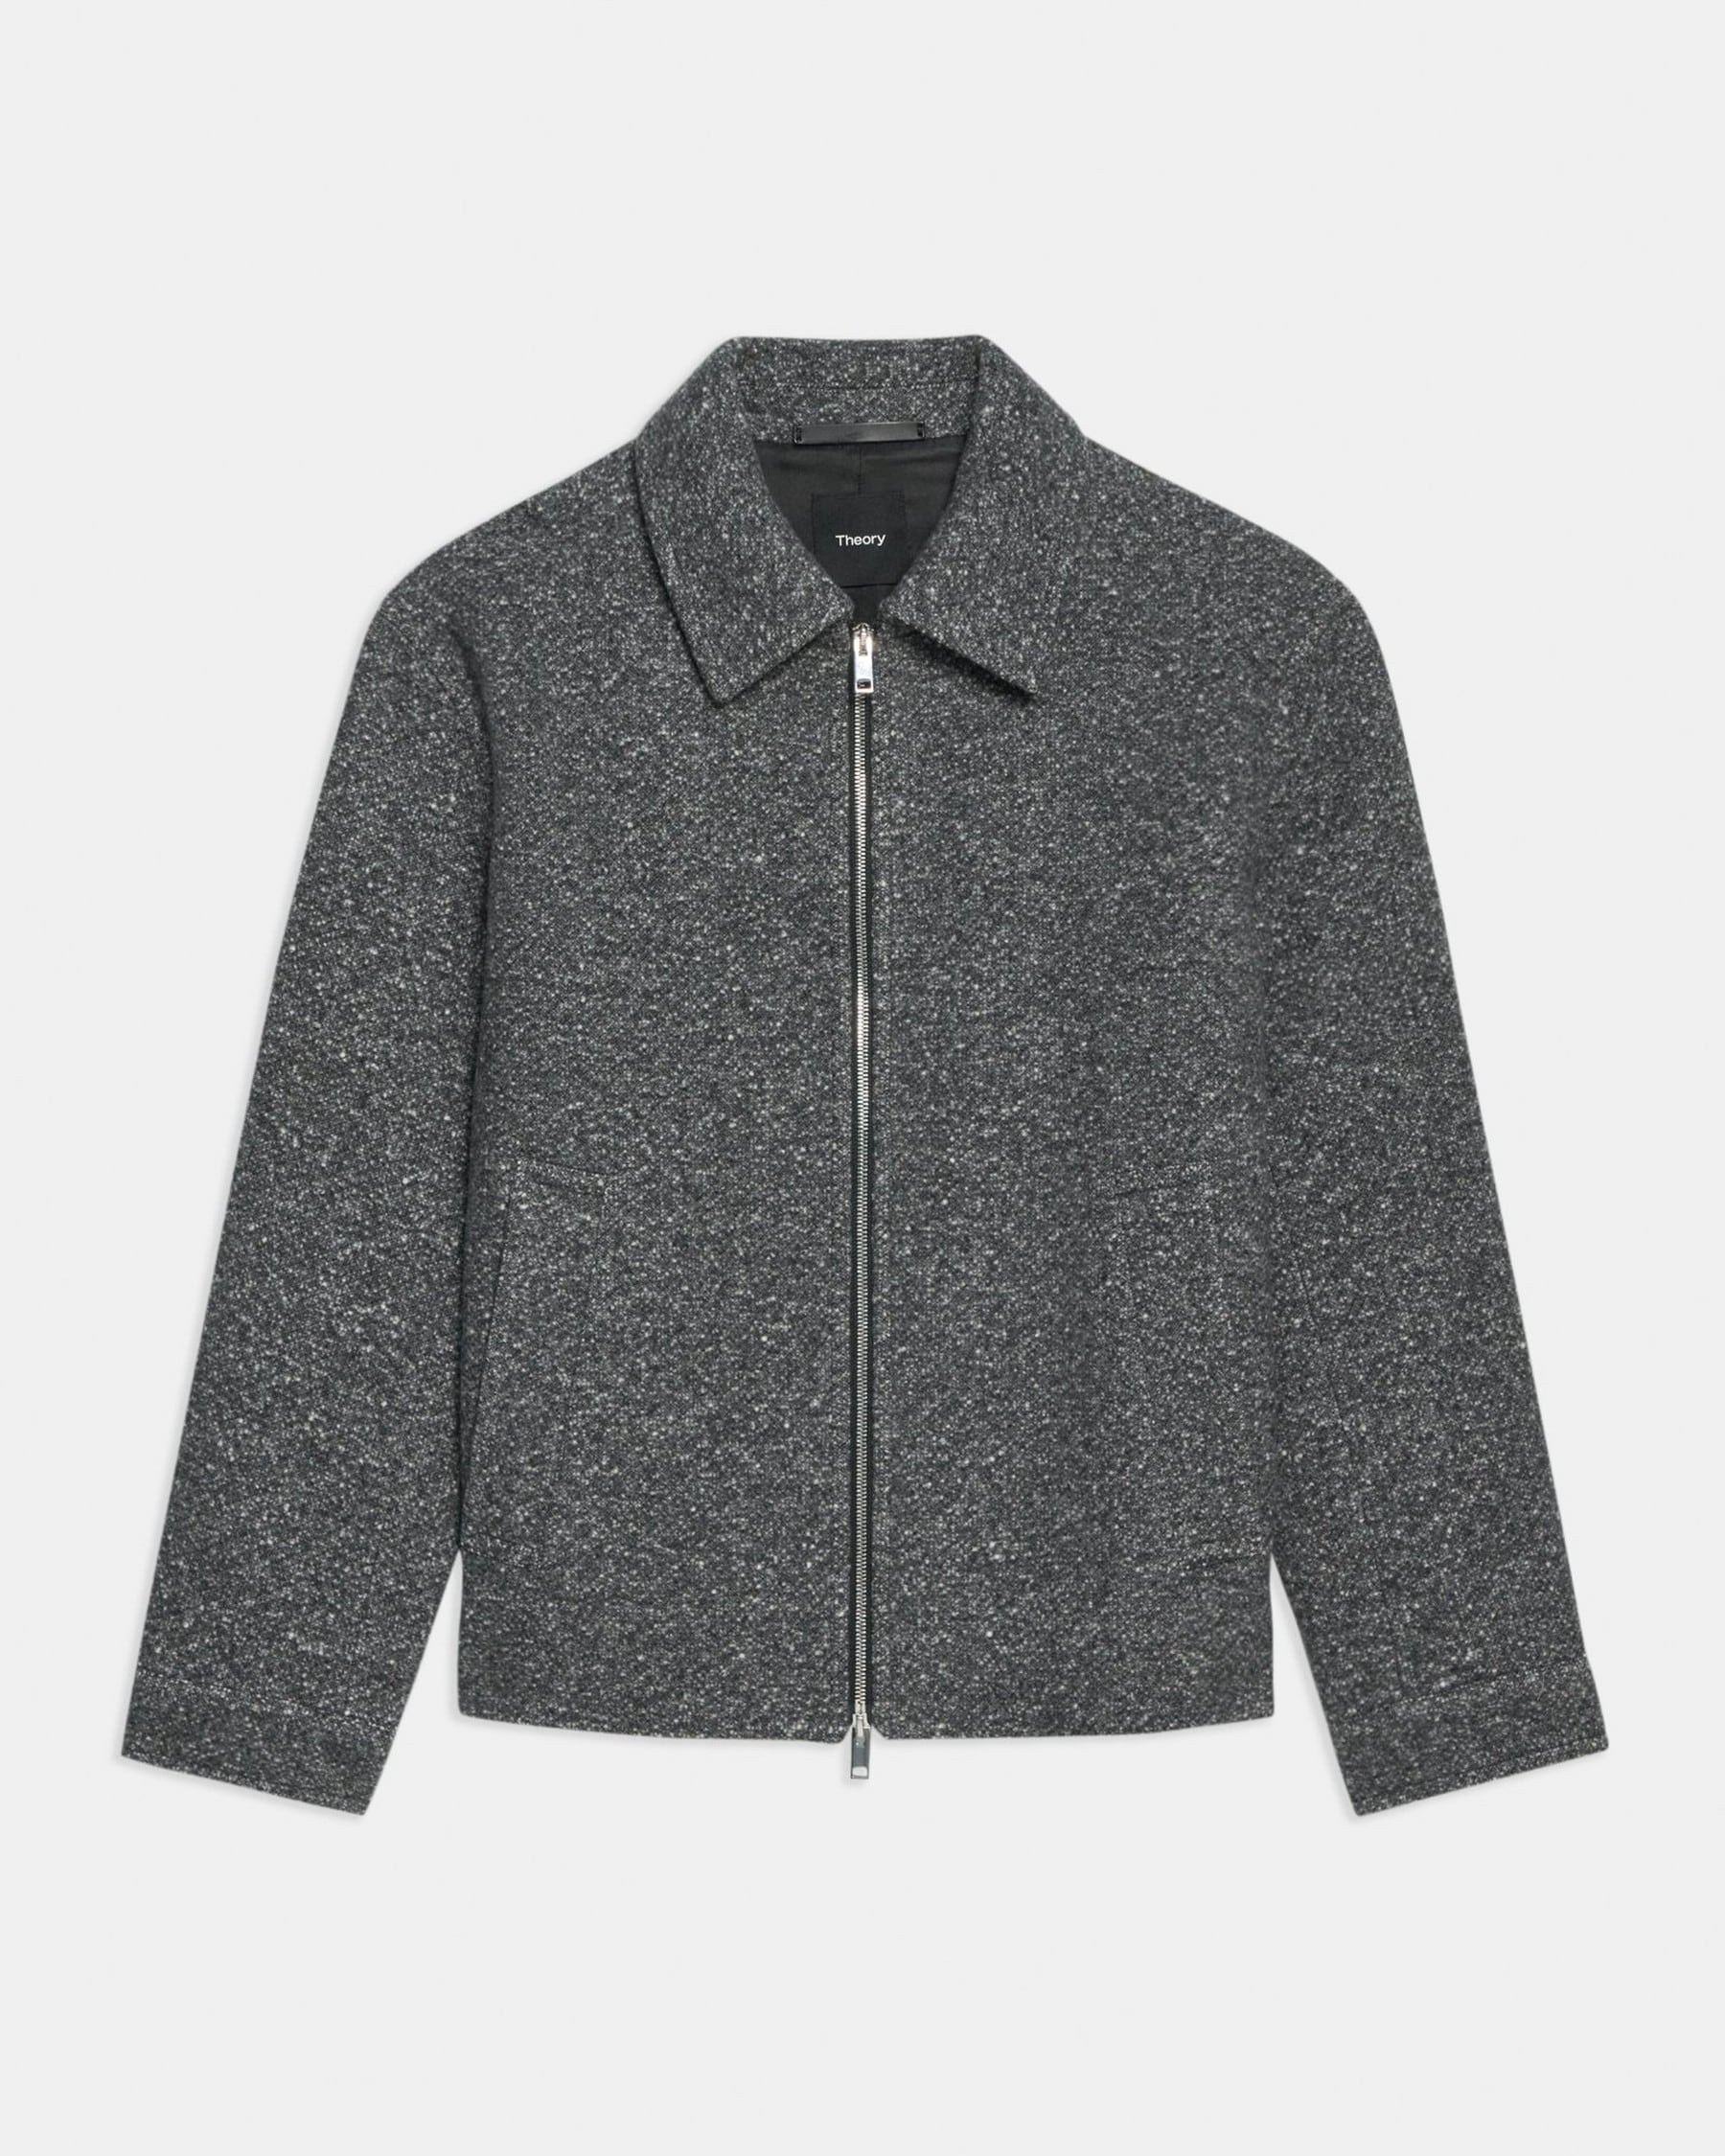 Milo Zip Jacket in Wool-Blend Bouclé